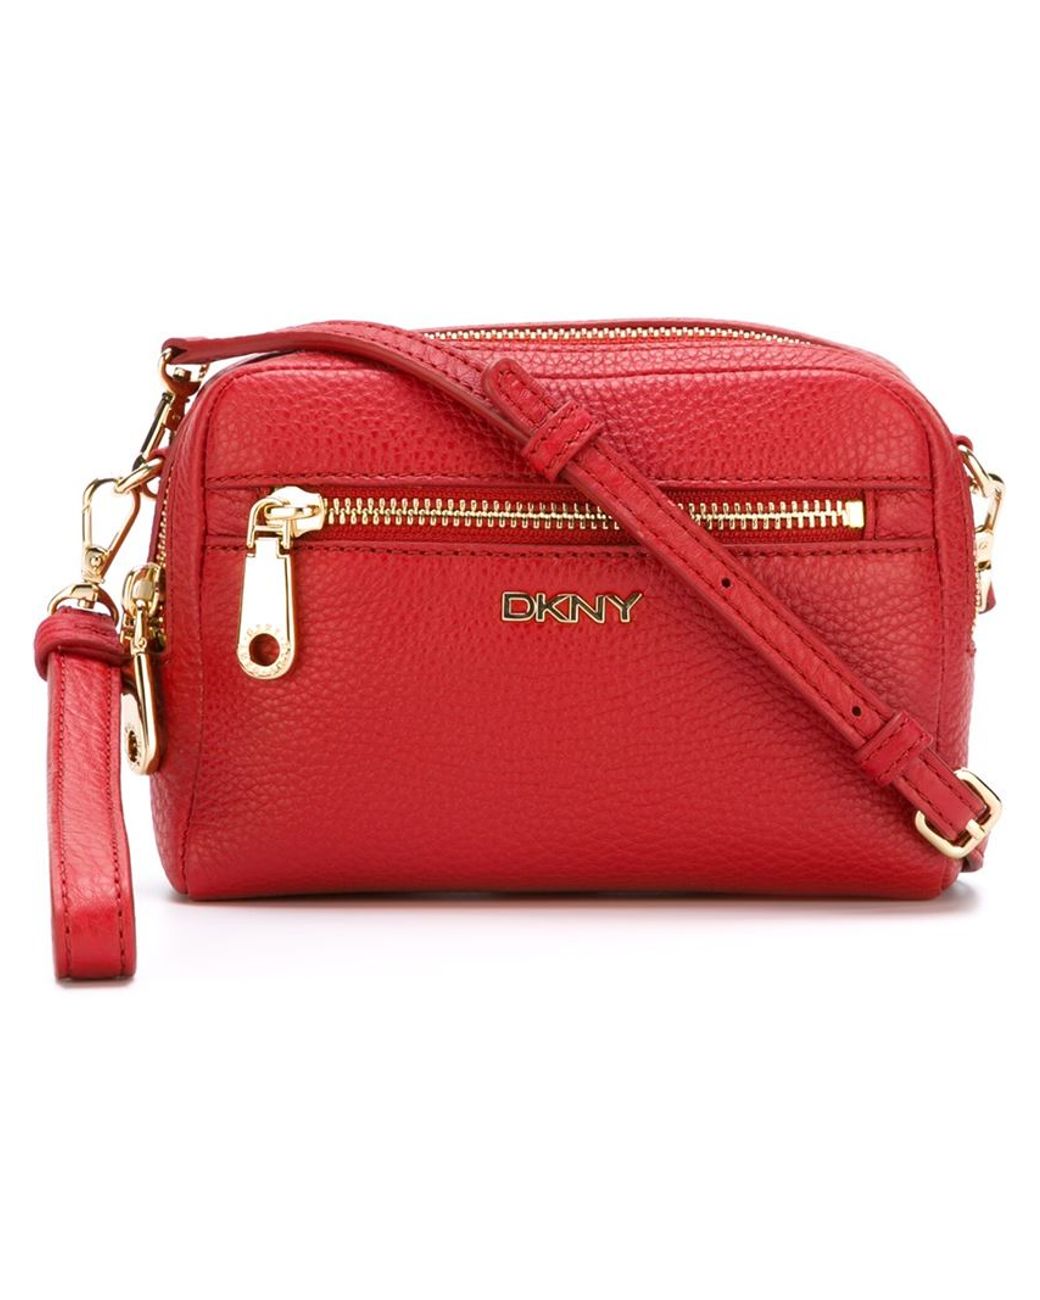 DKNY Small Zip Crossbody Bag in Red